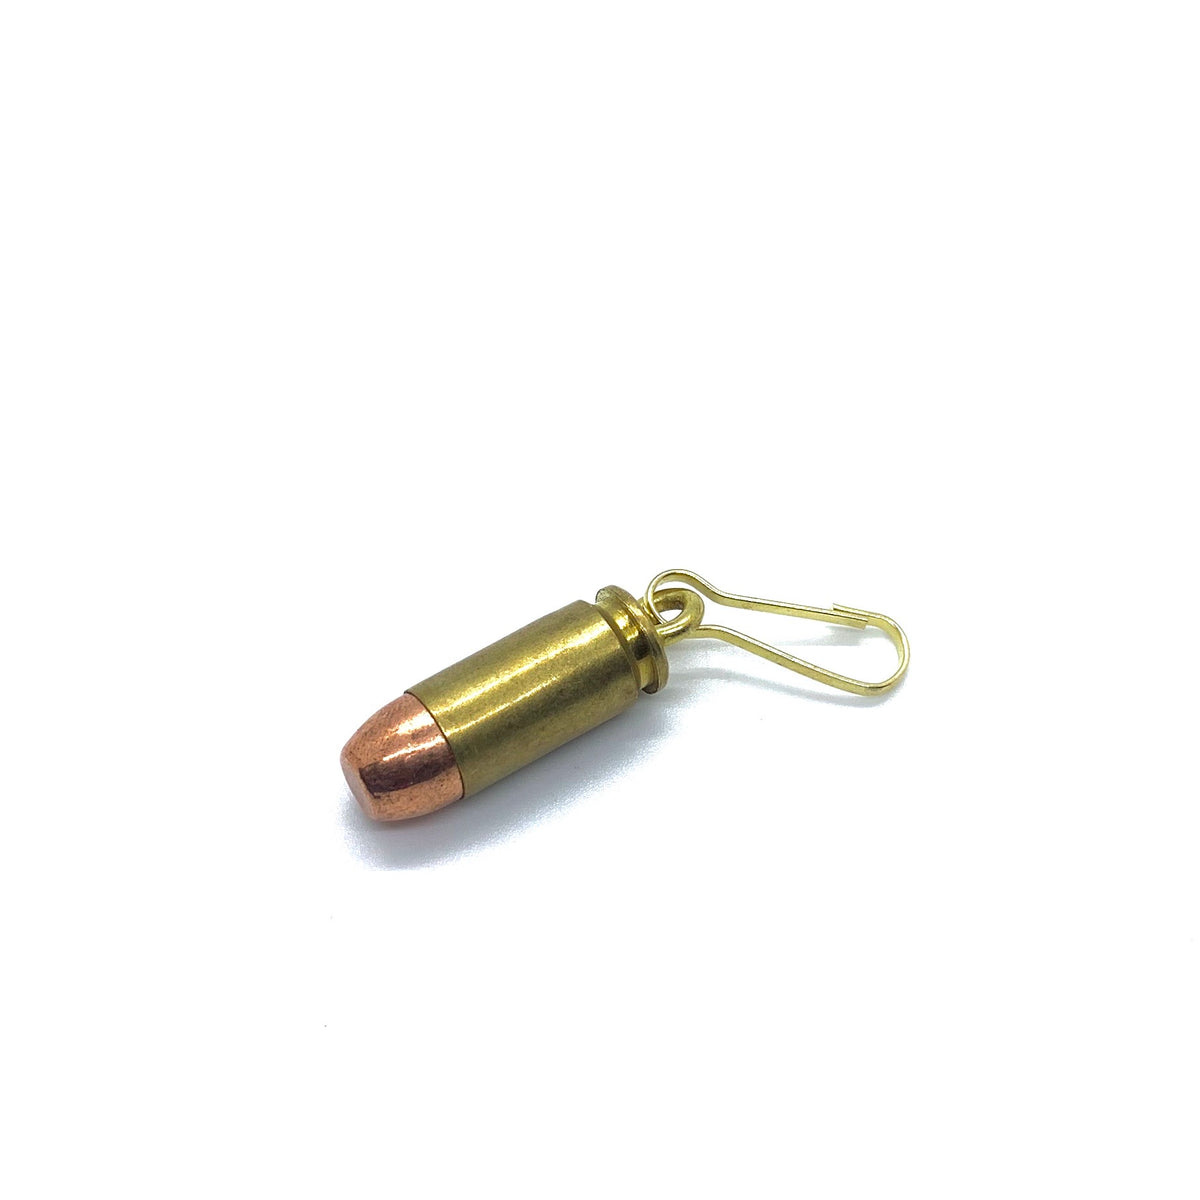 Spent Brass Bullet Zipper Pull